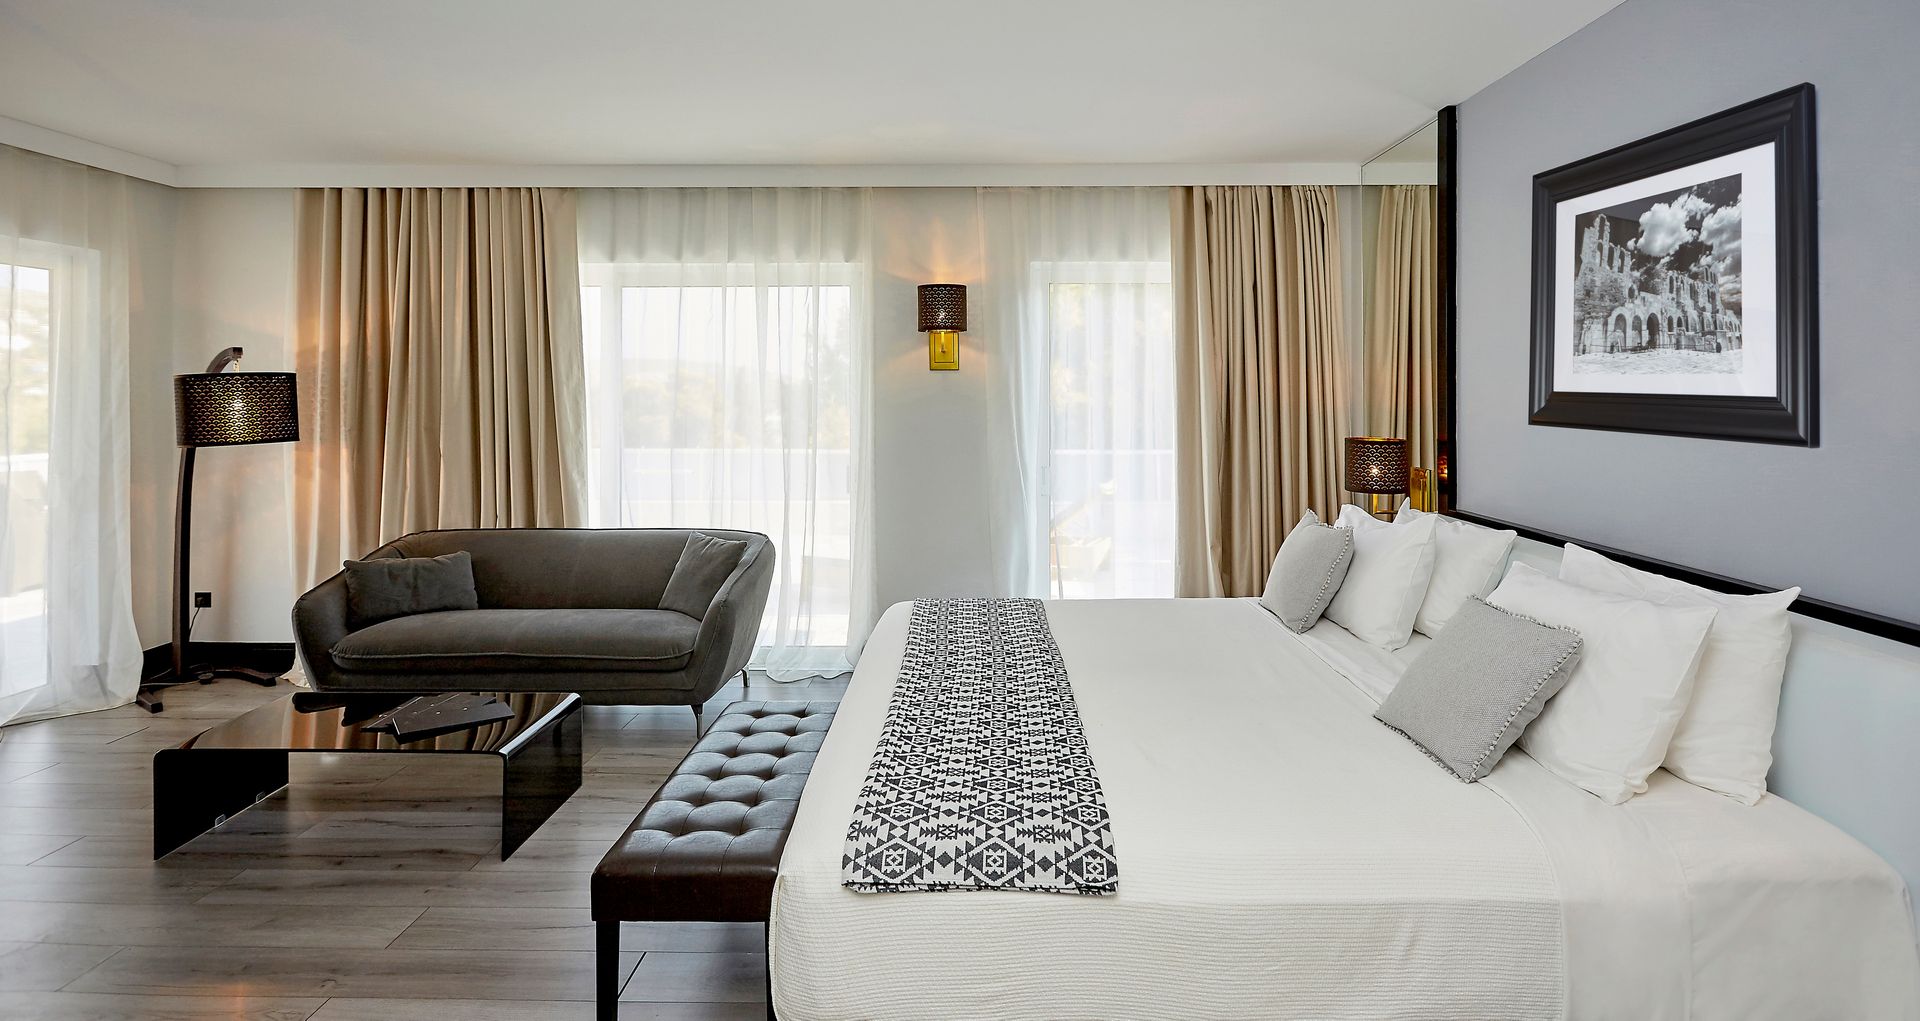 4* Athenian Riviera Hotel & Suites - Βουλιαγμένη ✦ 2 Ημέρες (1 Διανυκτέρευση) ✦ 2 άτομα ✦ 2 ✦ έως 30/09/2022 ✦ Κοντά σε Παραλία!